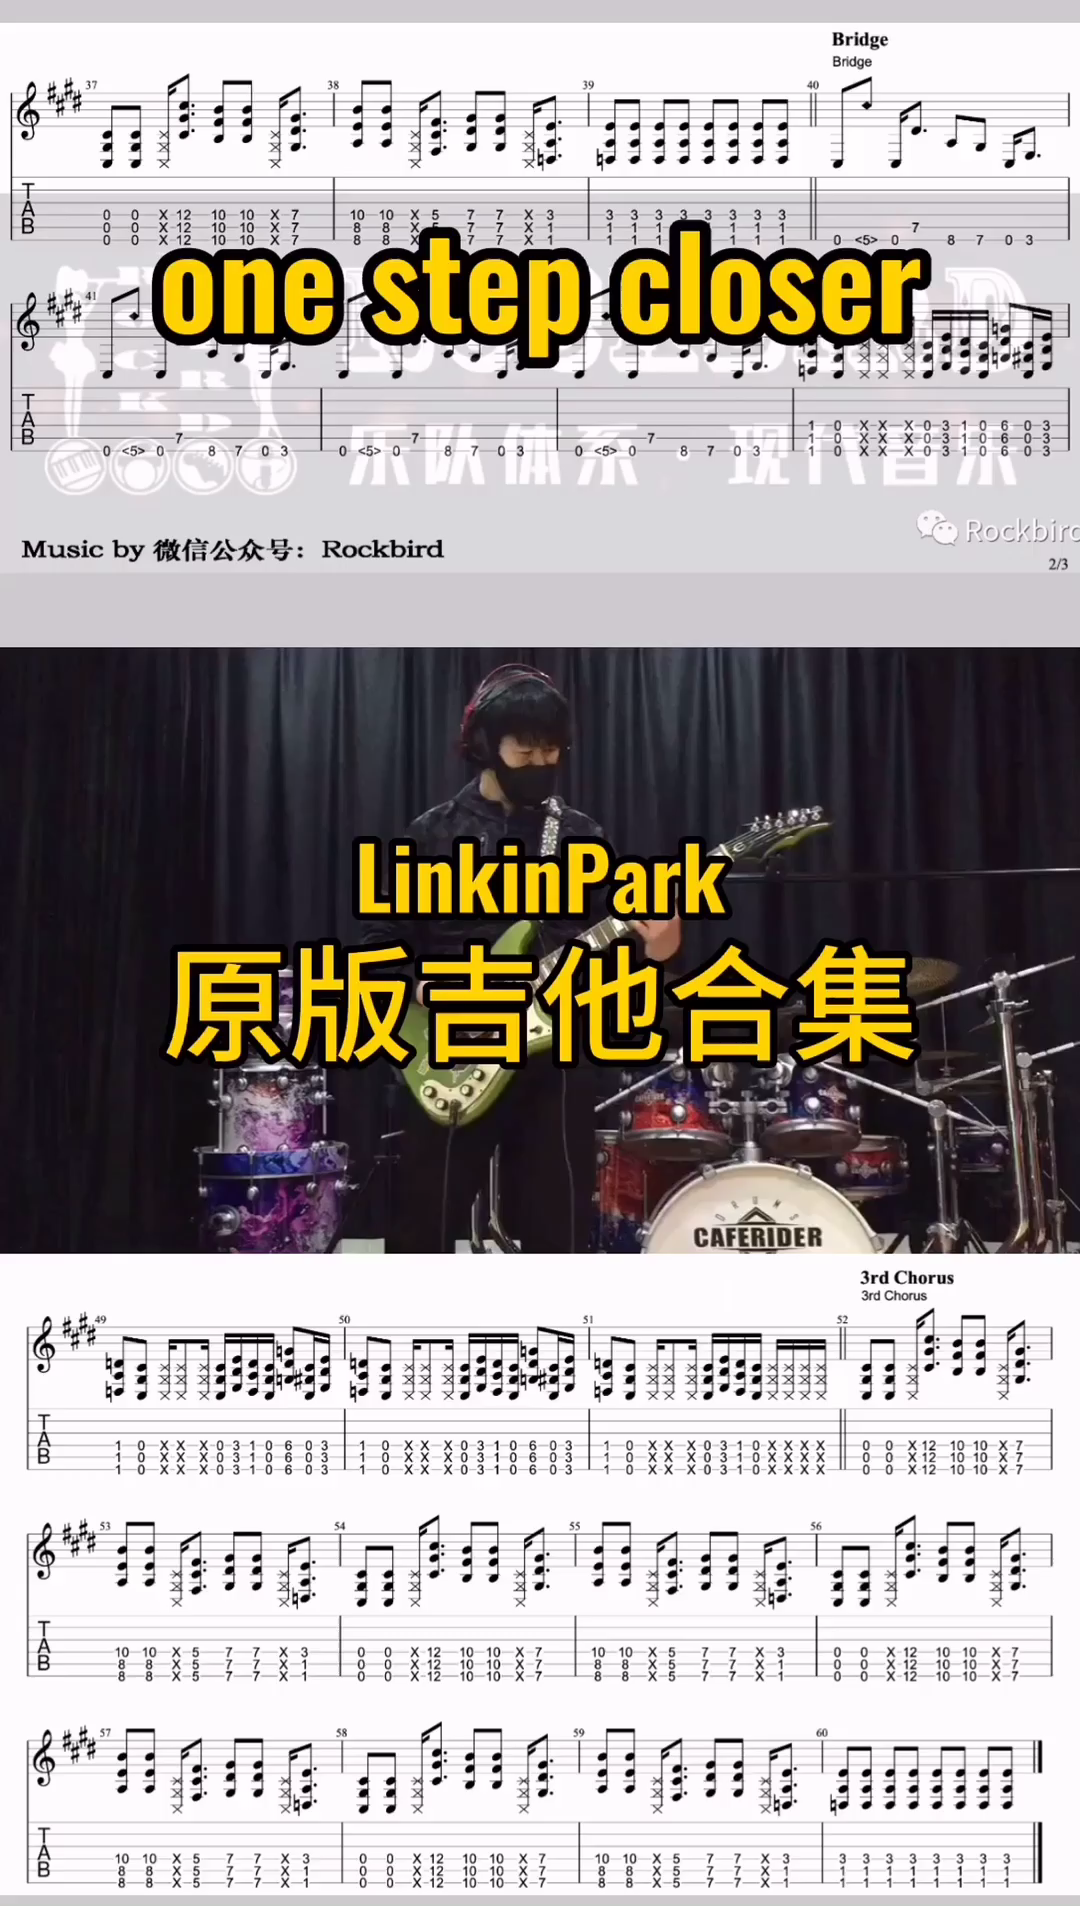 In The End吉他谱_Linkin Park【林肯公园】_原版吉他简谱 - 吉他谱 - 中国曲谱网